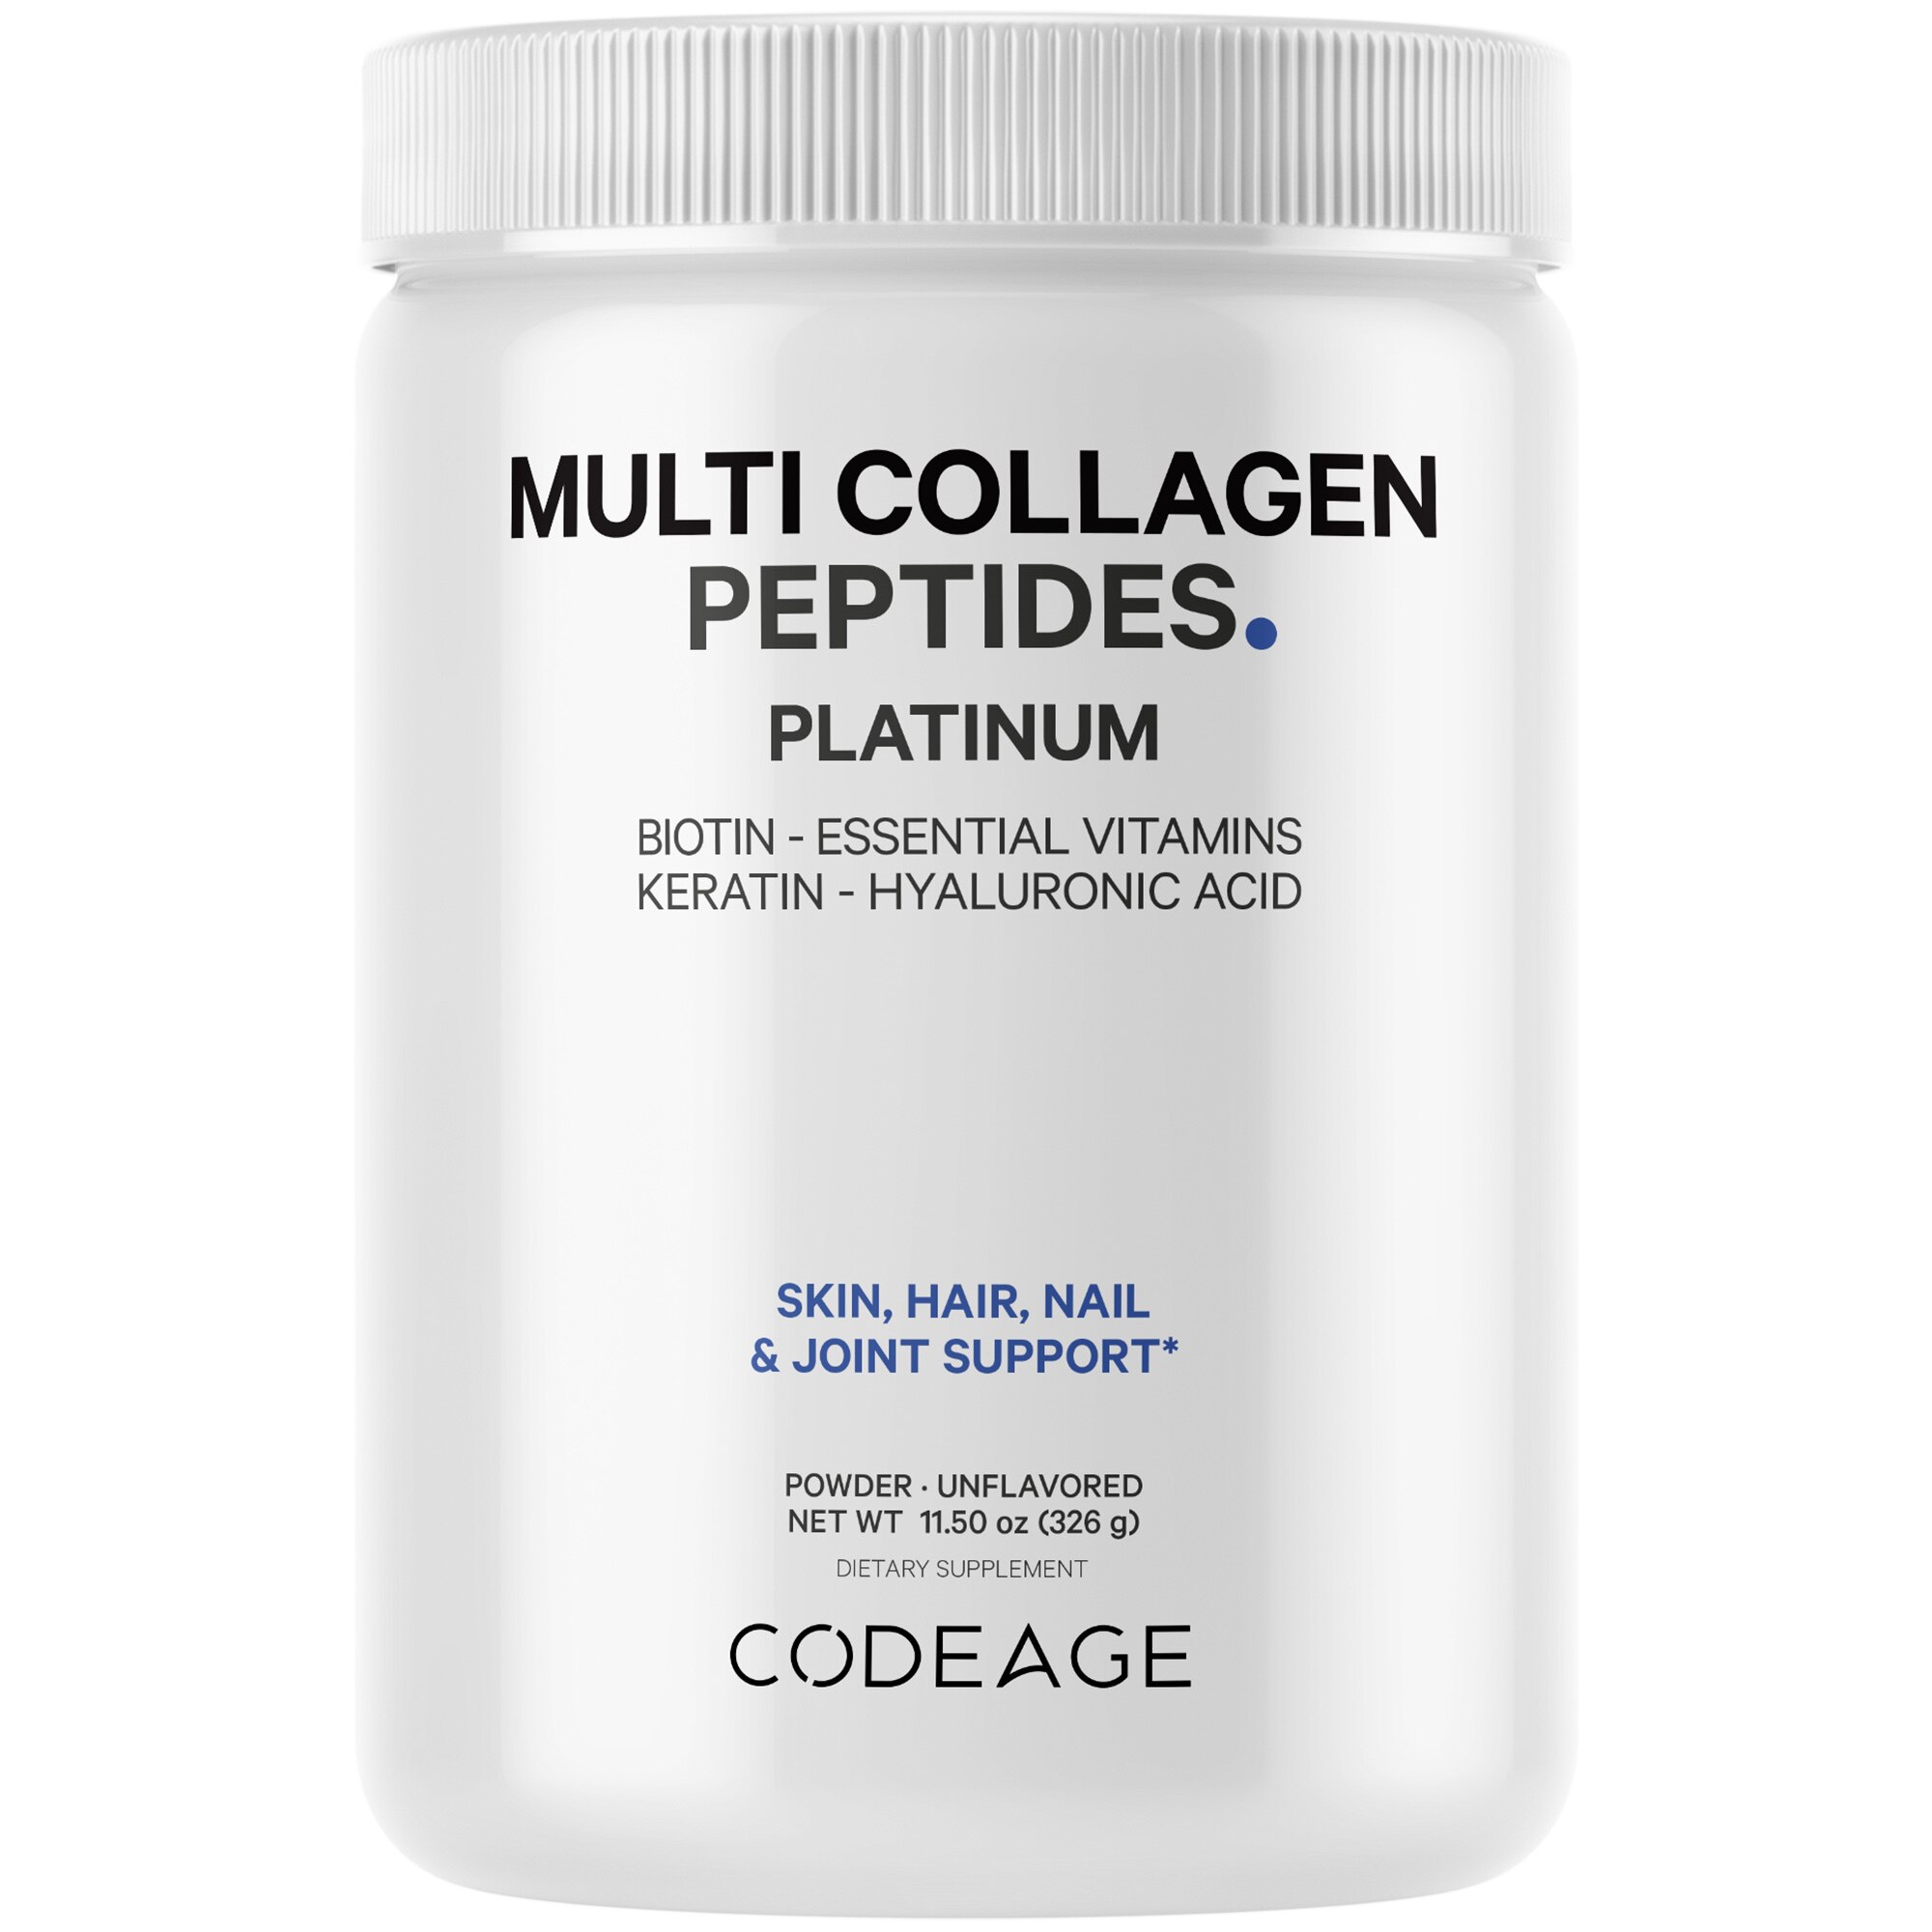 Codeage Multi Collagen Protein Powder Platinum, Biotin, Vitamin C, B, D3, Keratin, Hyaluronic Acid, 11.5 OZ